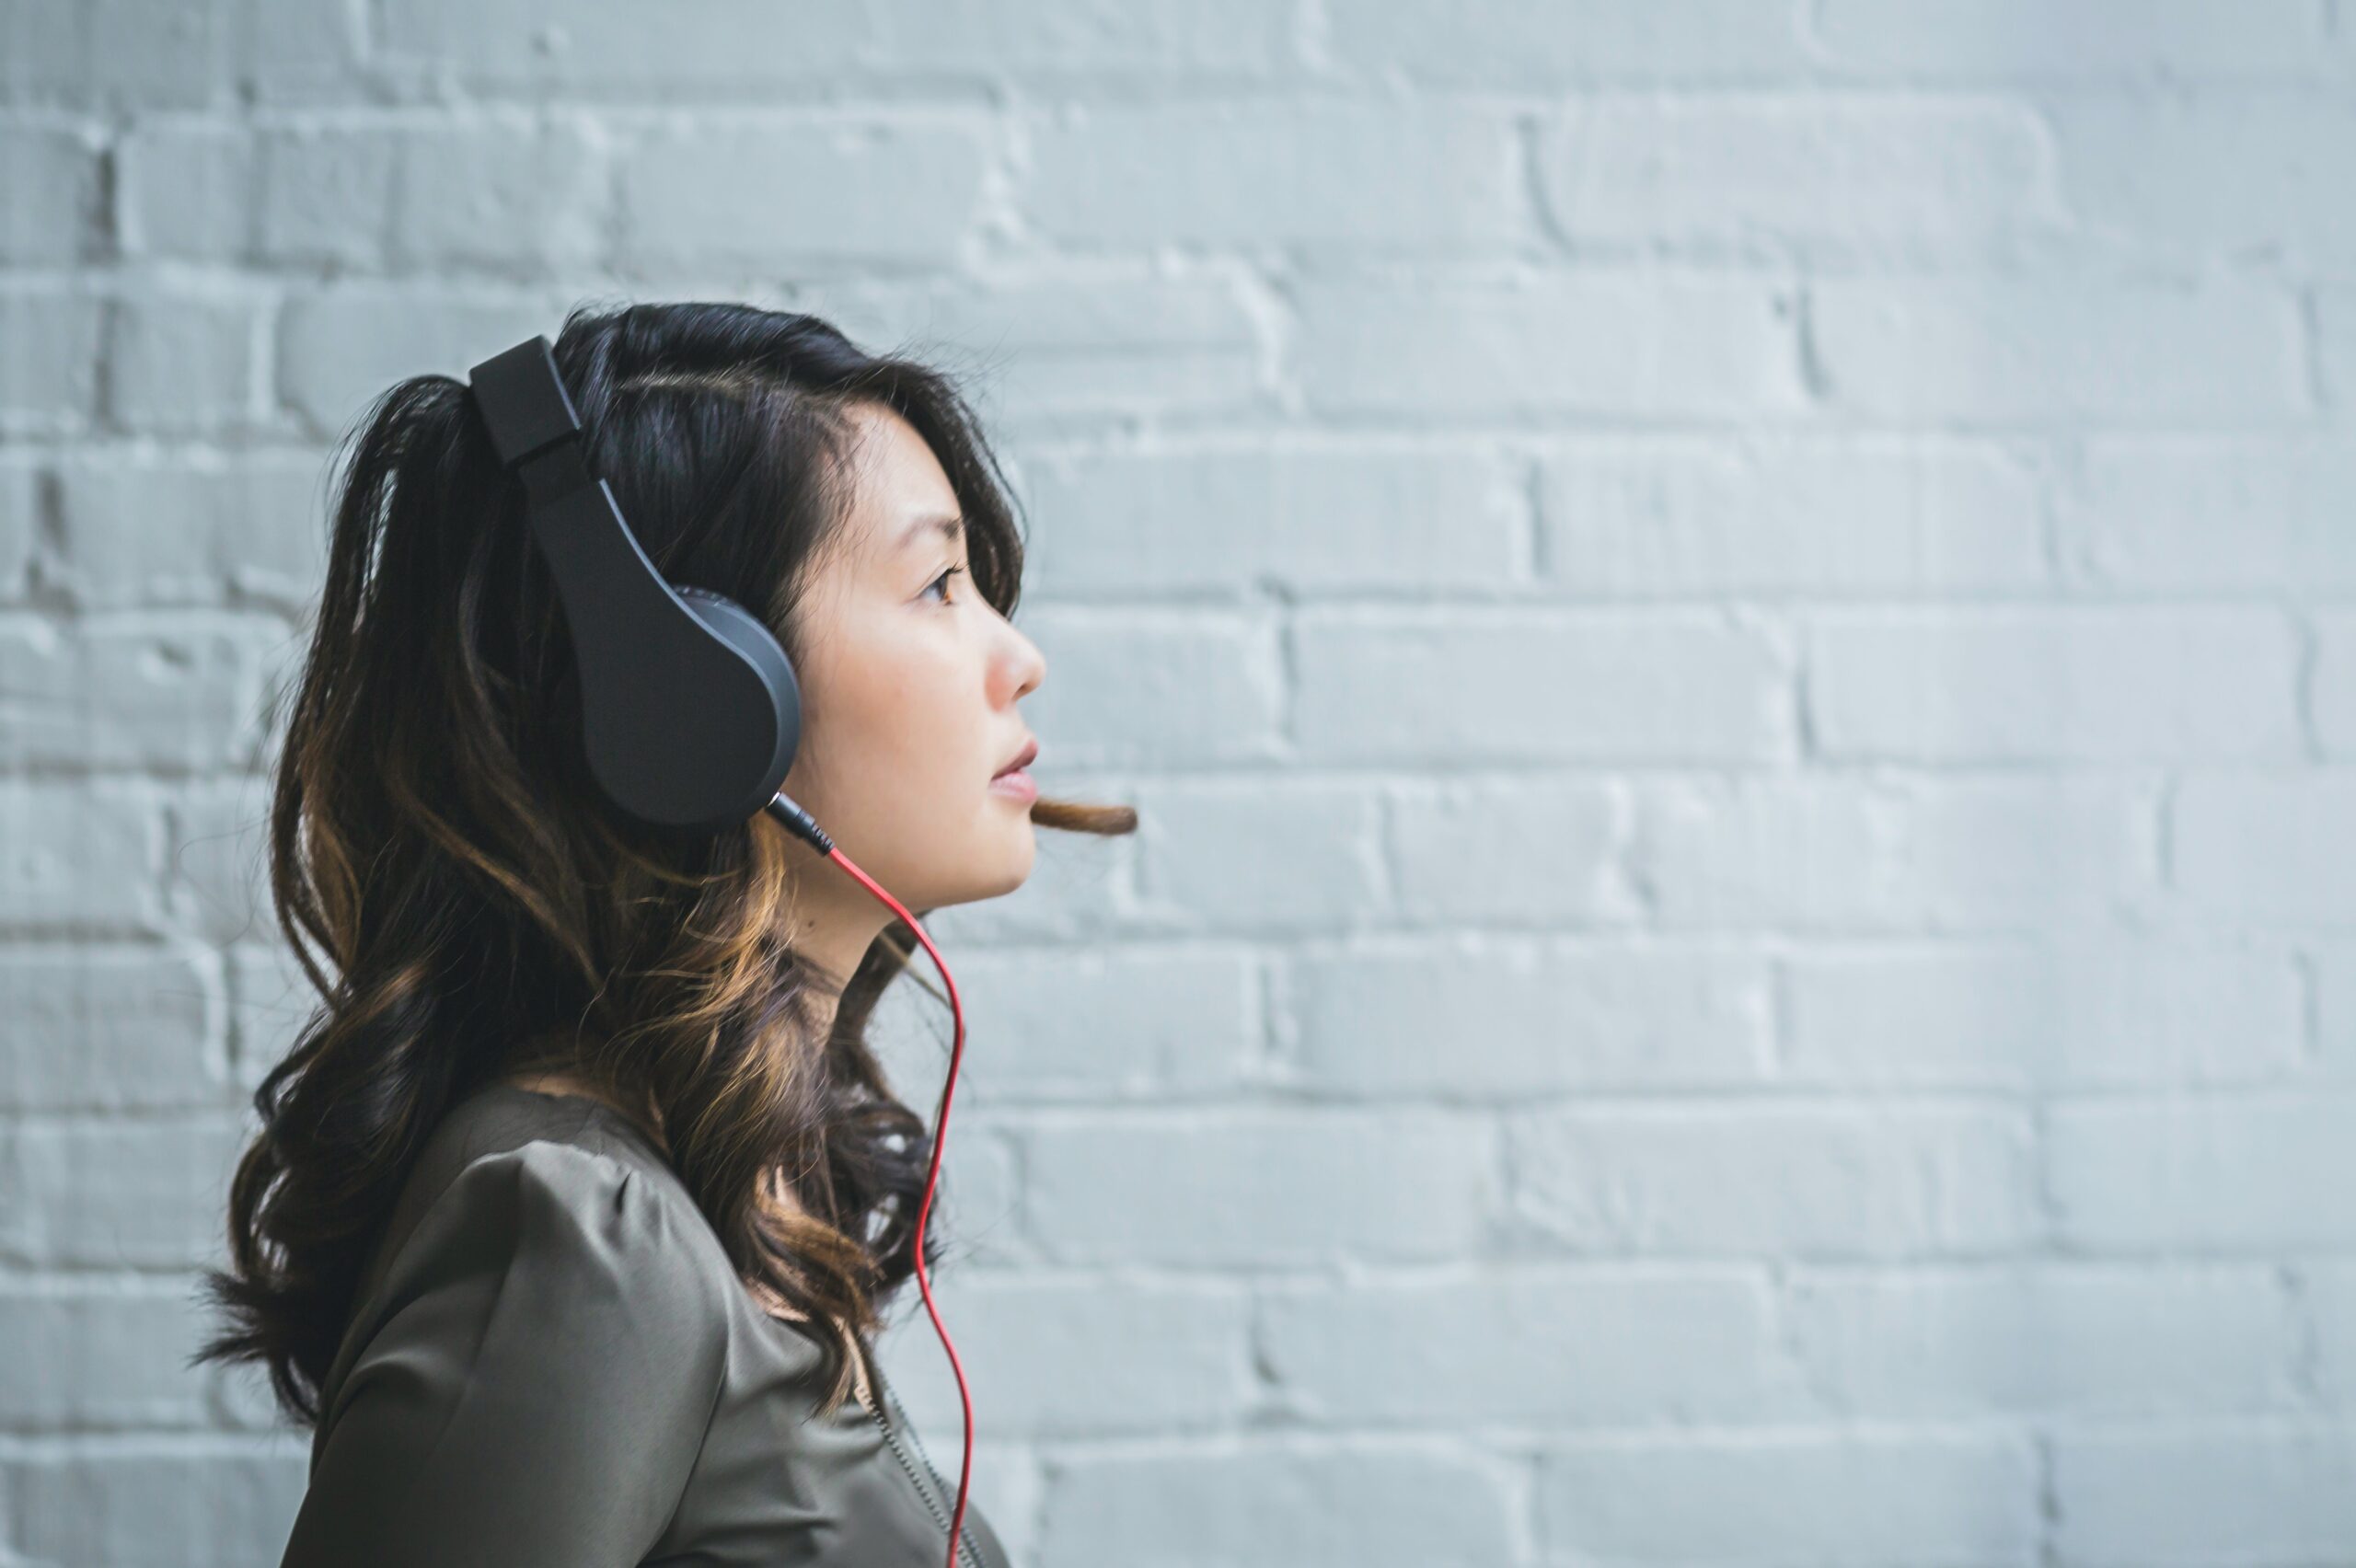 Why Do We Speak Louder Than Normal When Wearing Headphones